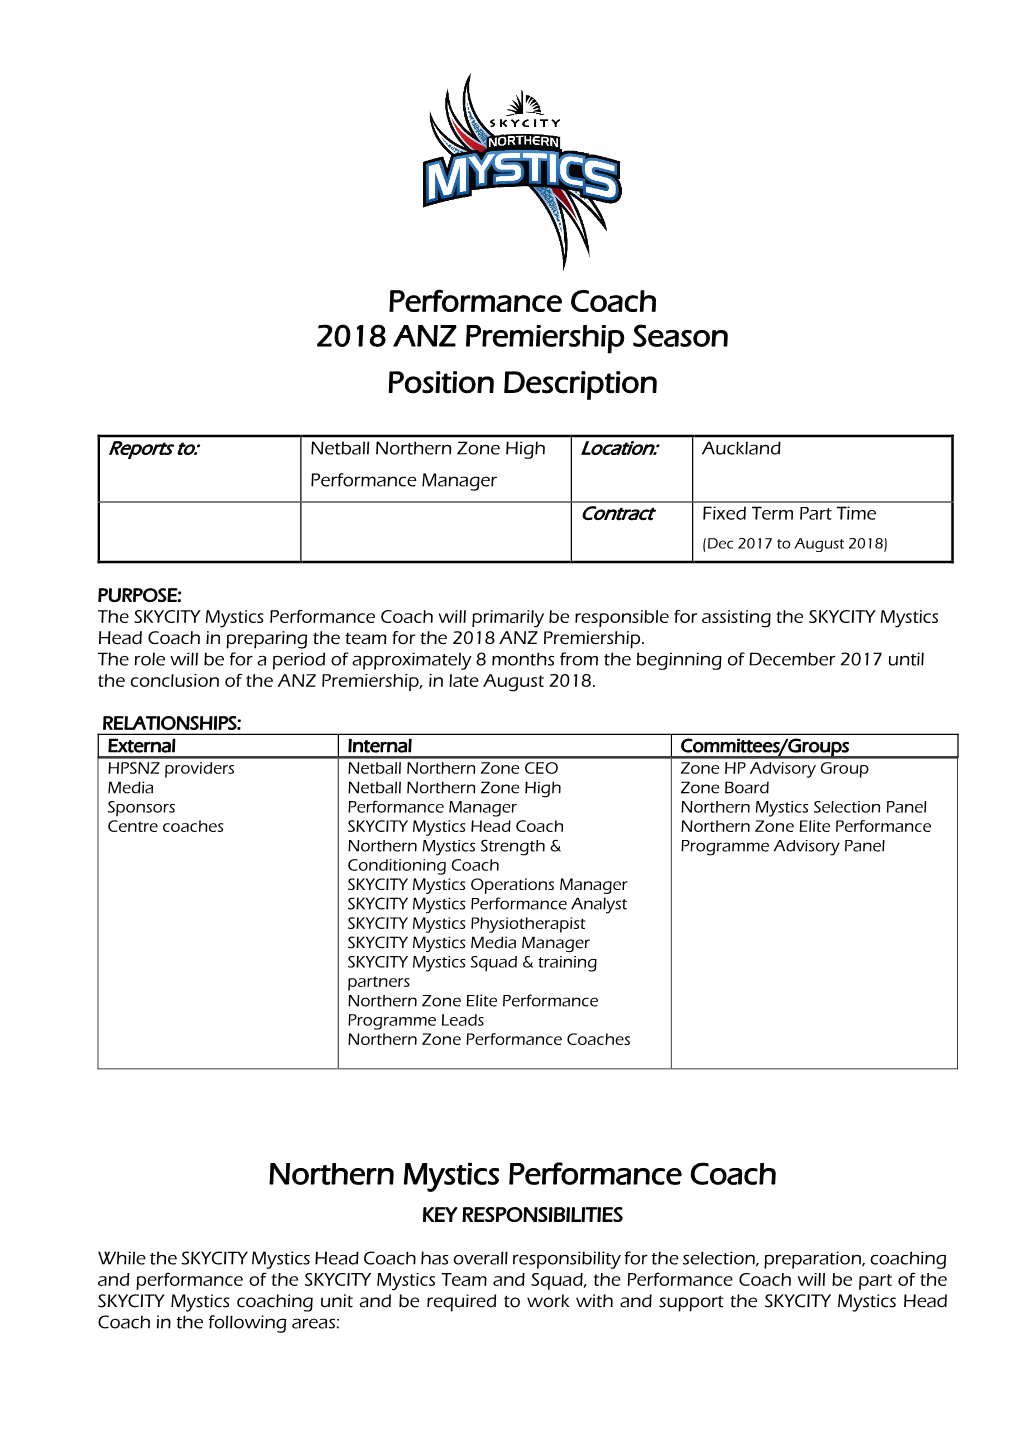 Performance Coach 2018 ANZ Premiership Season Position